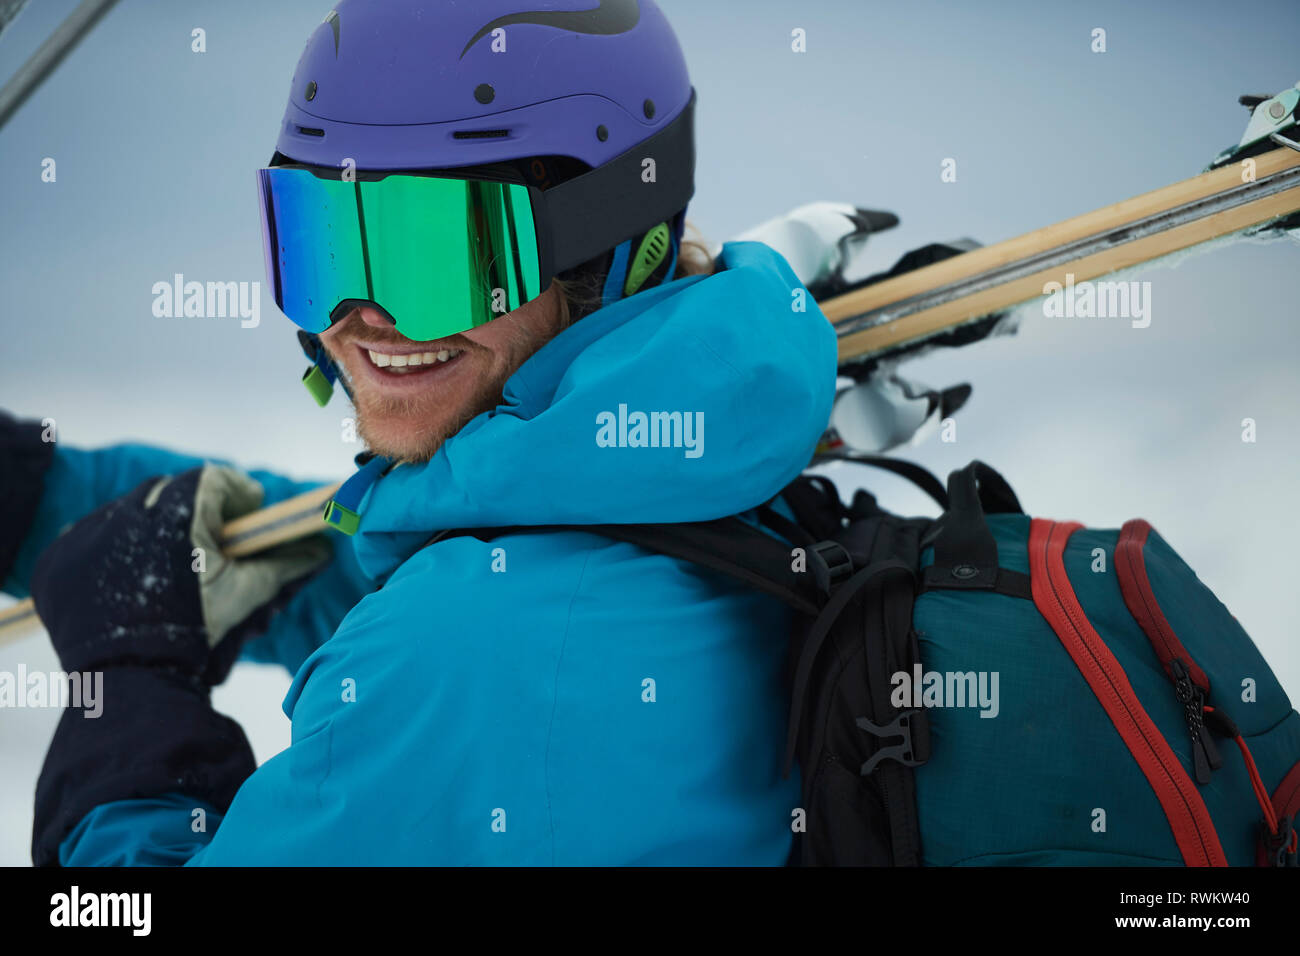 Male skier carrying skis looking over shoulder, portrait, Alpe-d'Huez, Rhone-Alpes, France Stock Photo